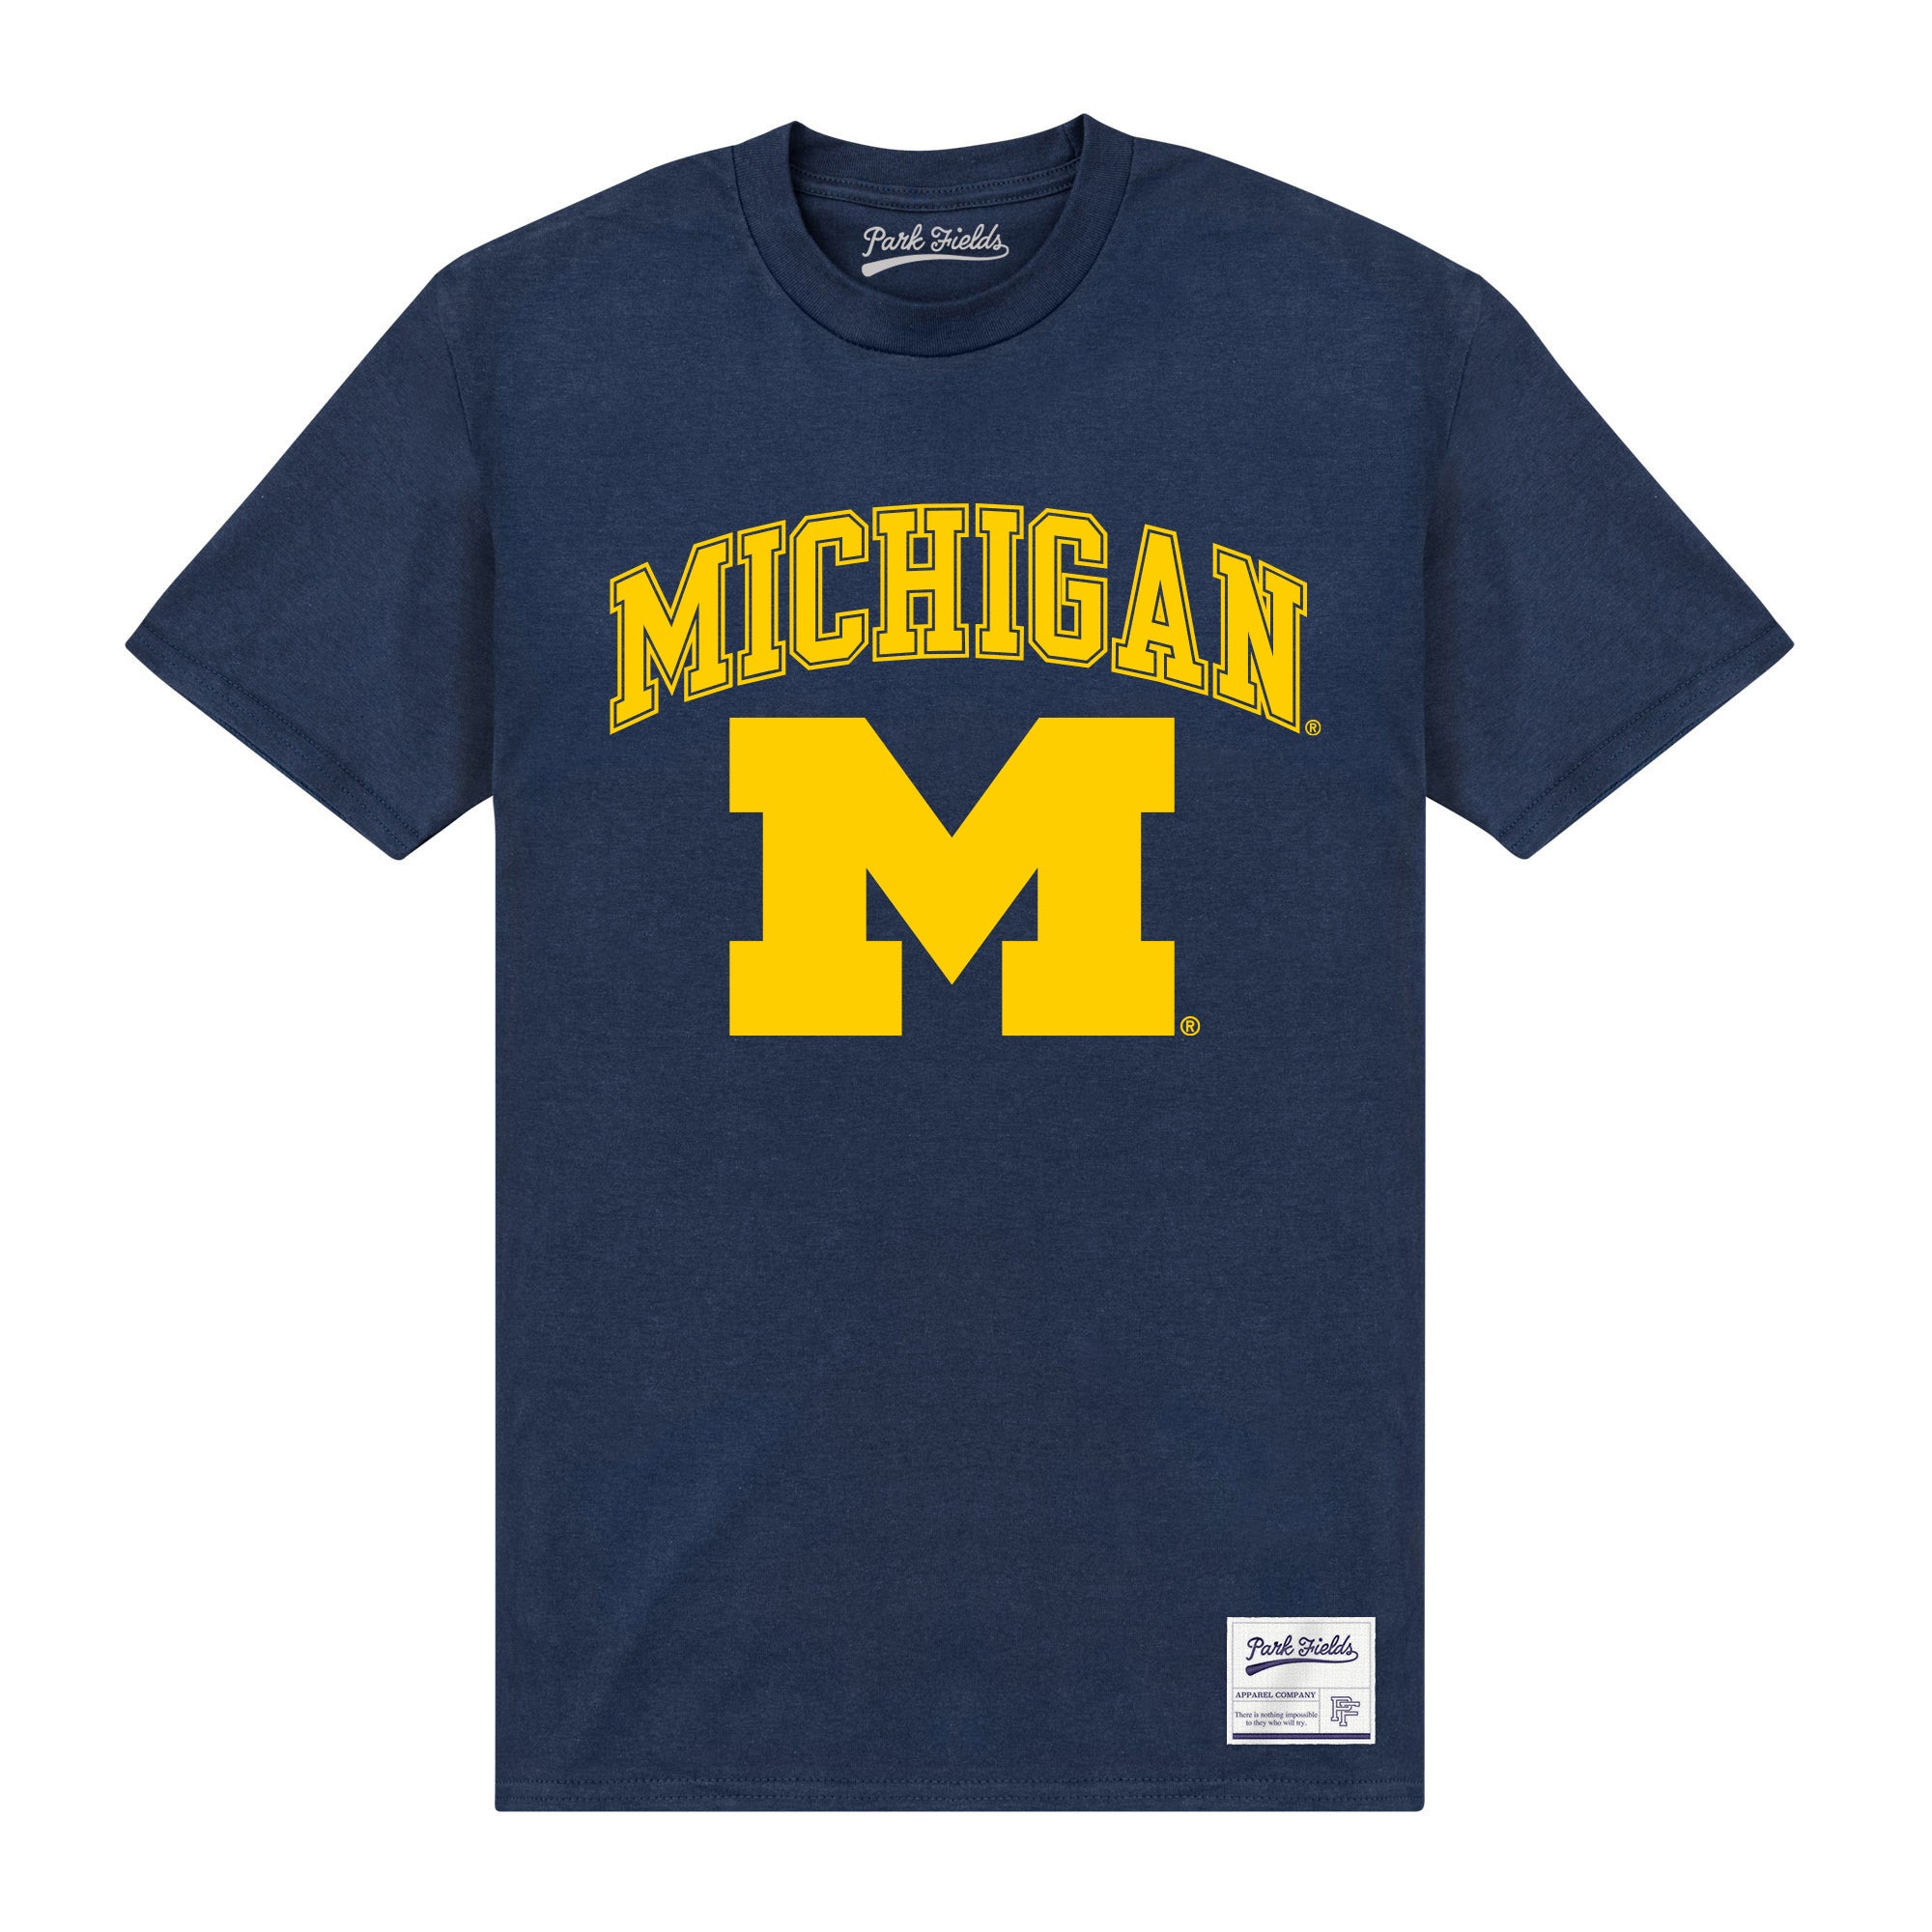 Michigan M Navy T-Shirt